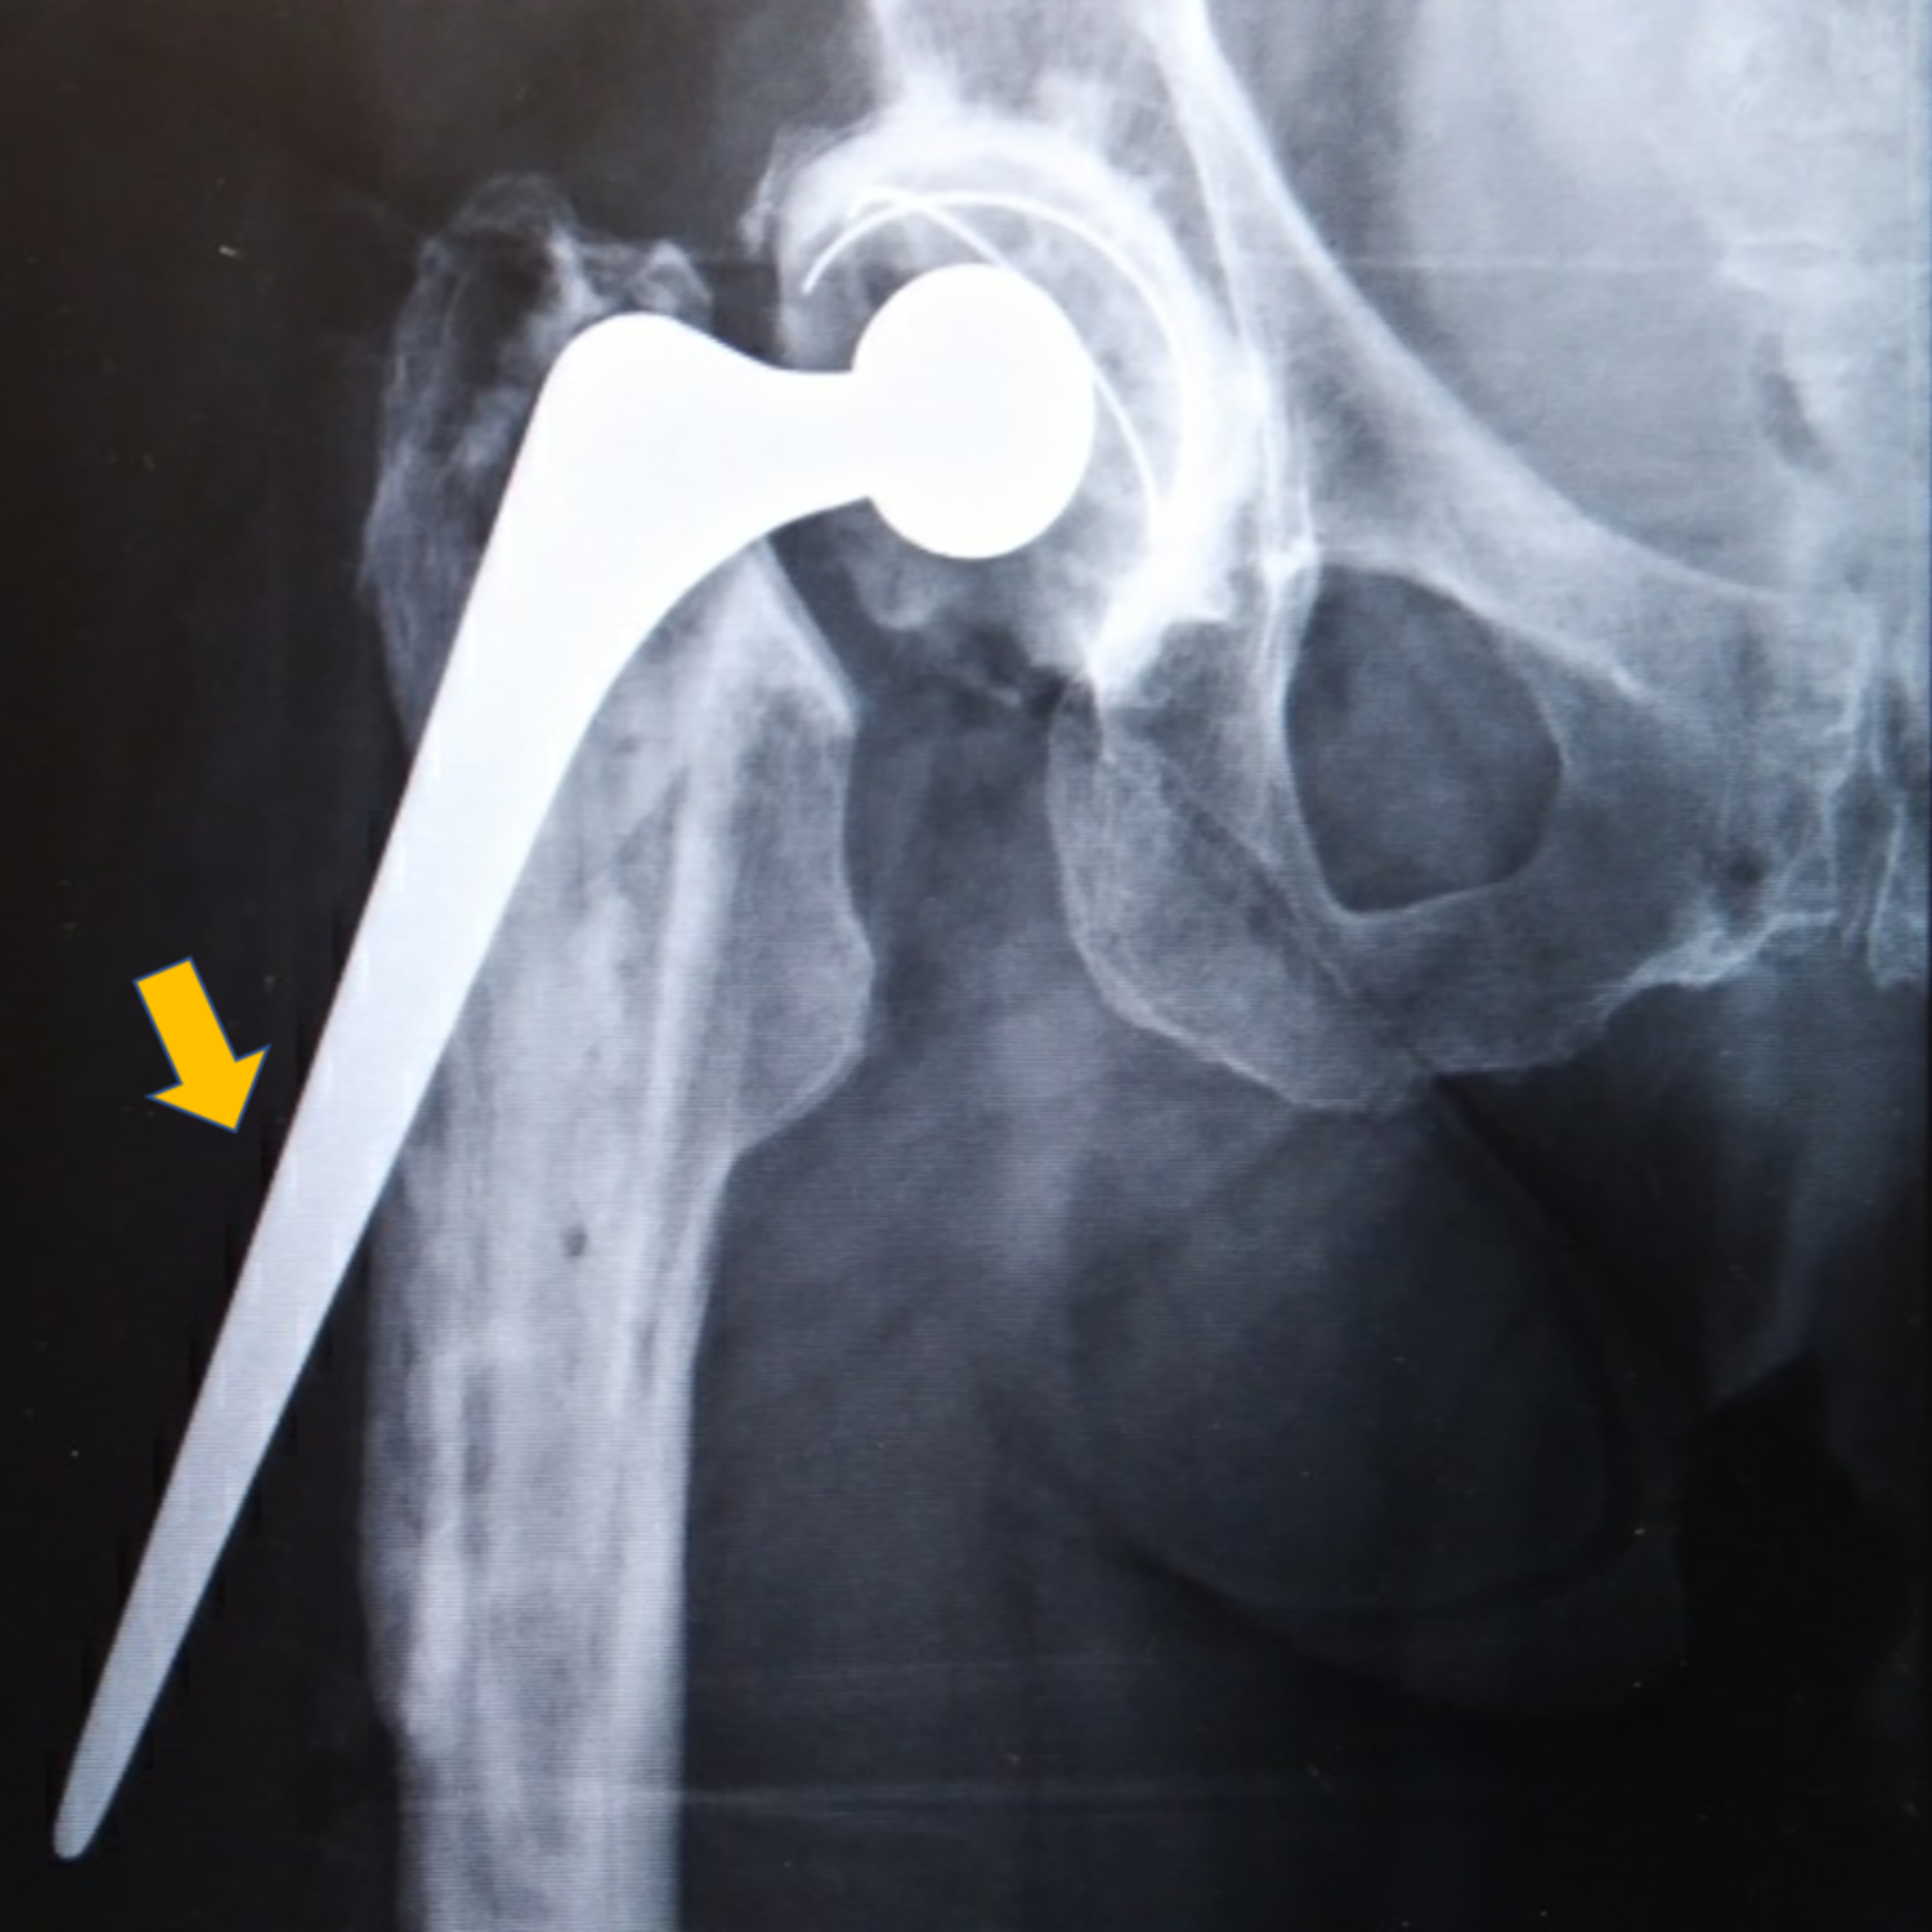 A fractured hip - riloei